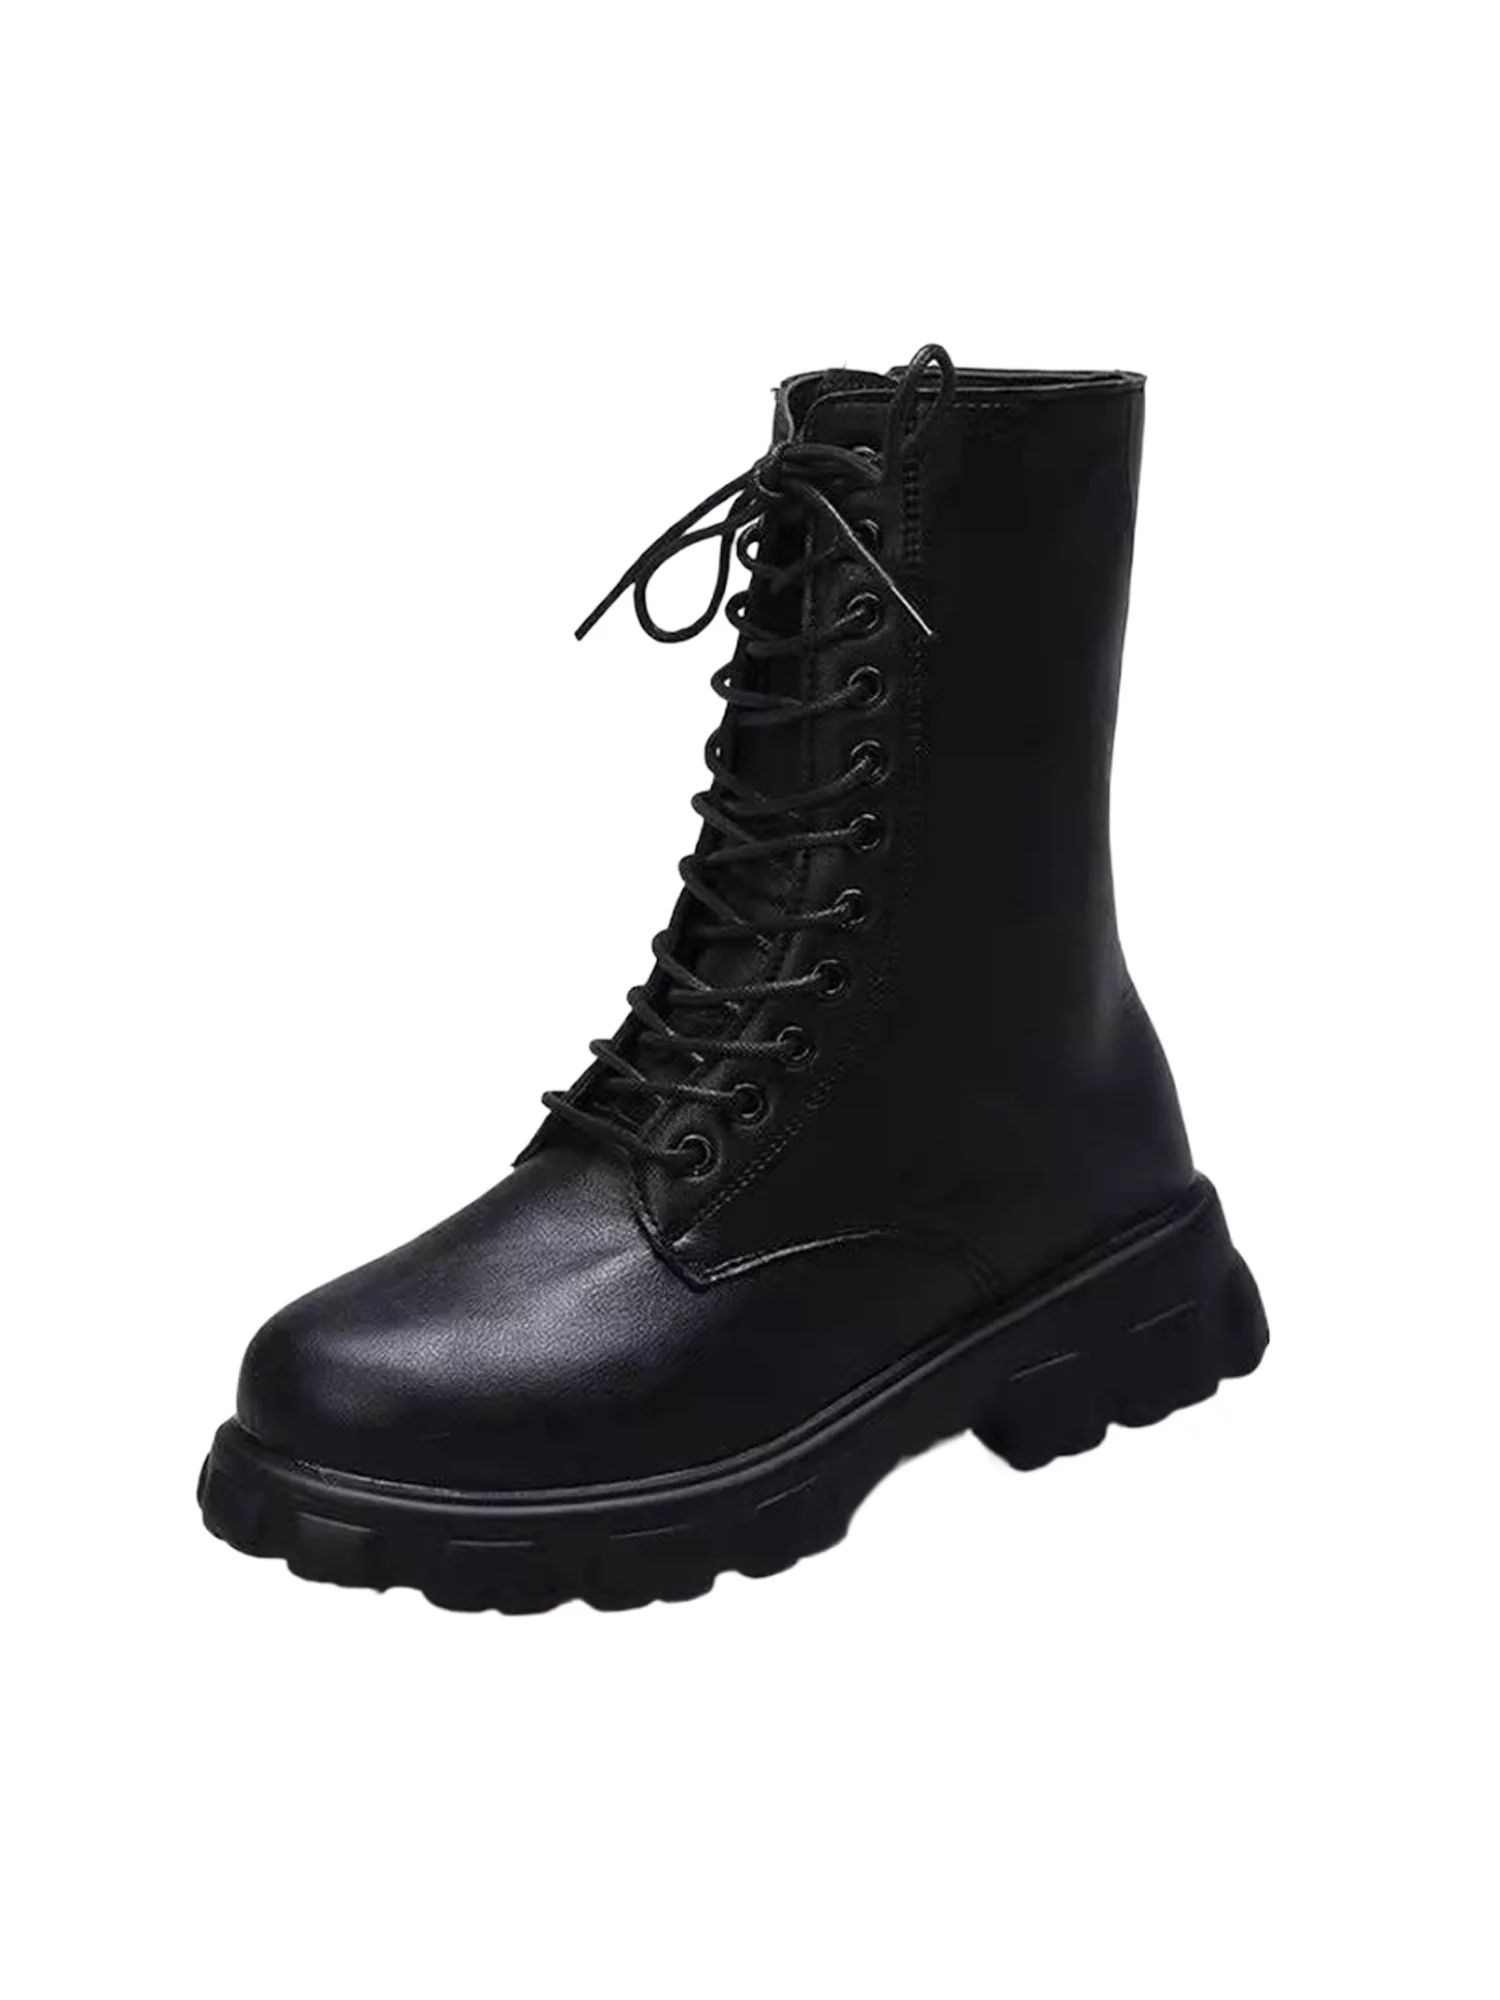 SIMANLAN Black Combat Boots Women Platform Lace-Up Boots Black 7.5 | Walmart (US)